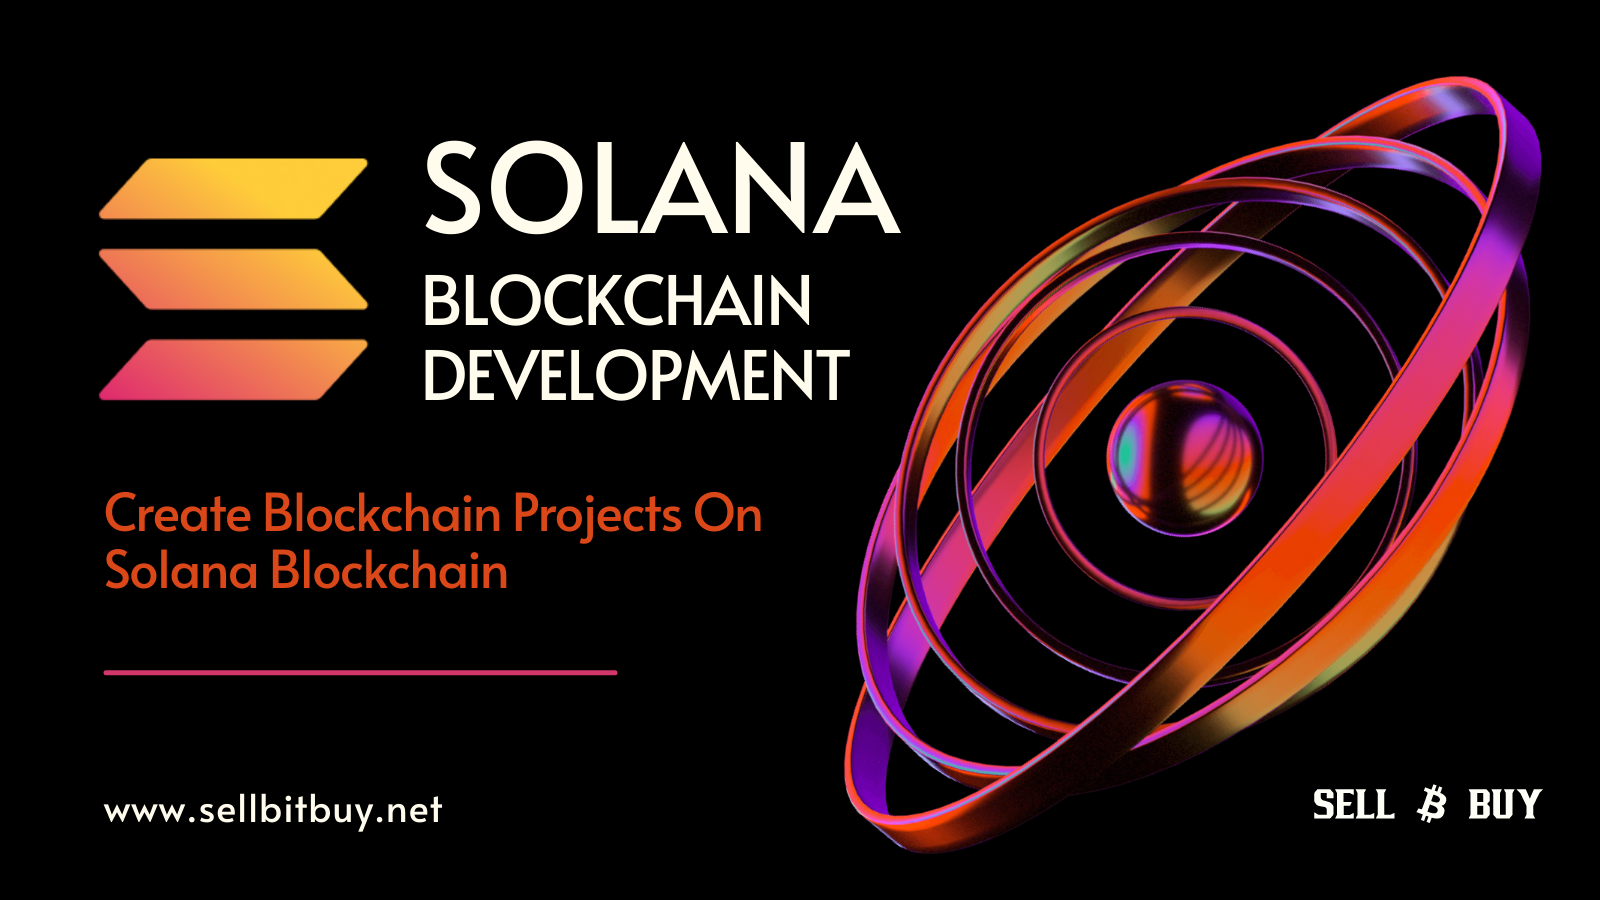 Solana Blockchain Development - Create Blockchain Projects On Solana Blockchain